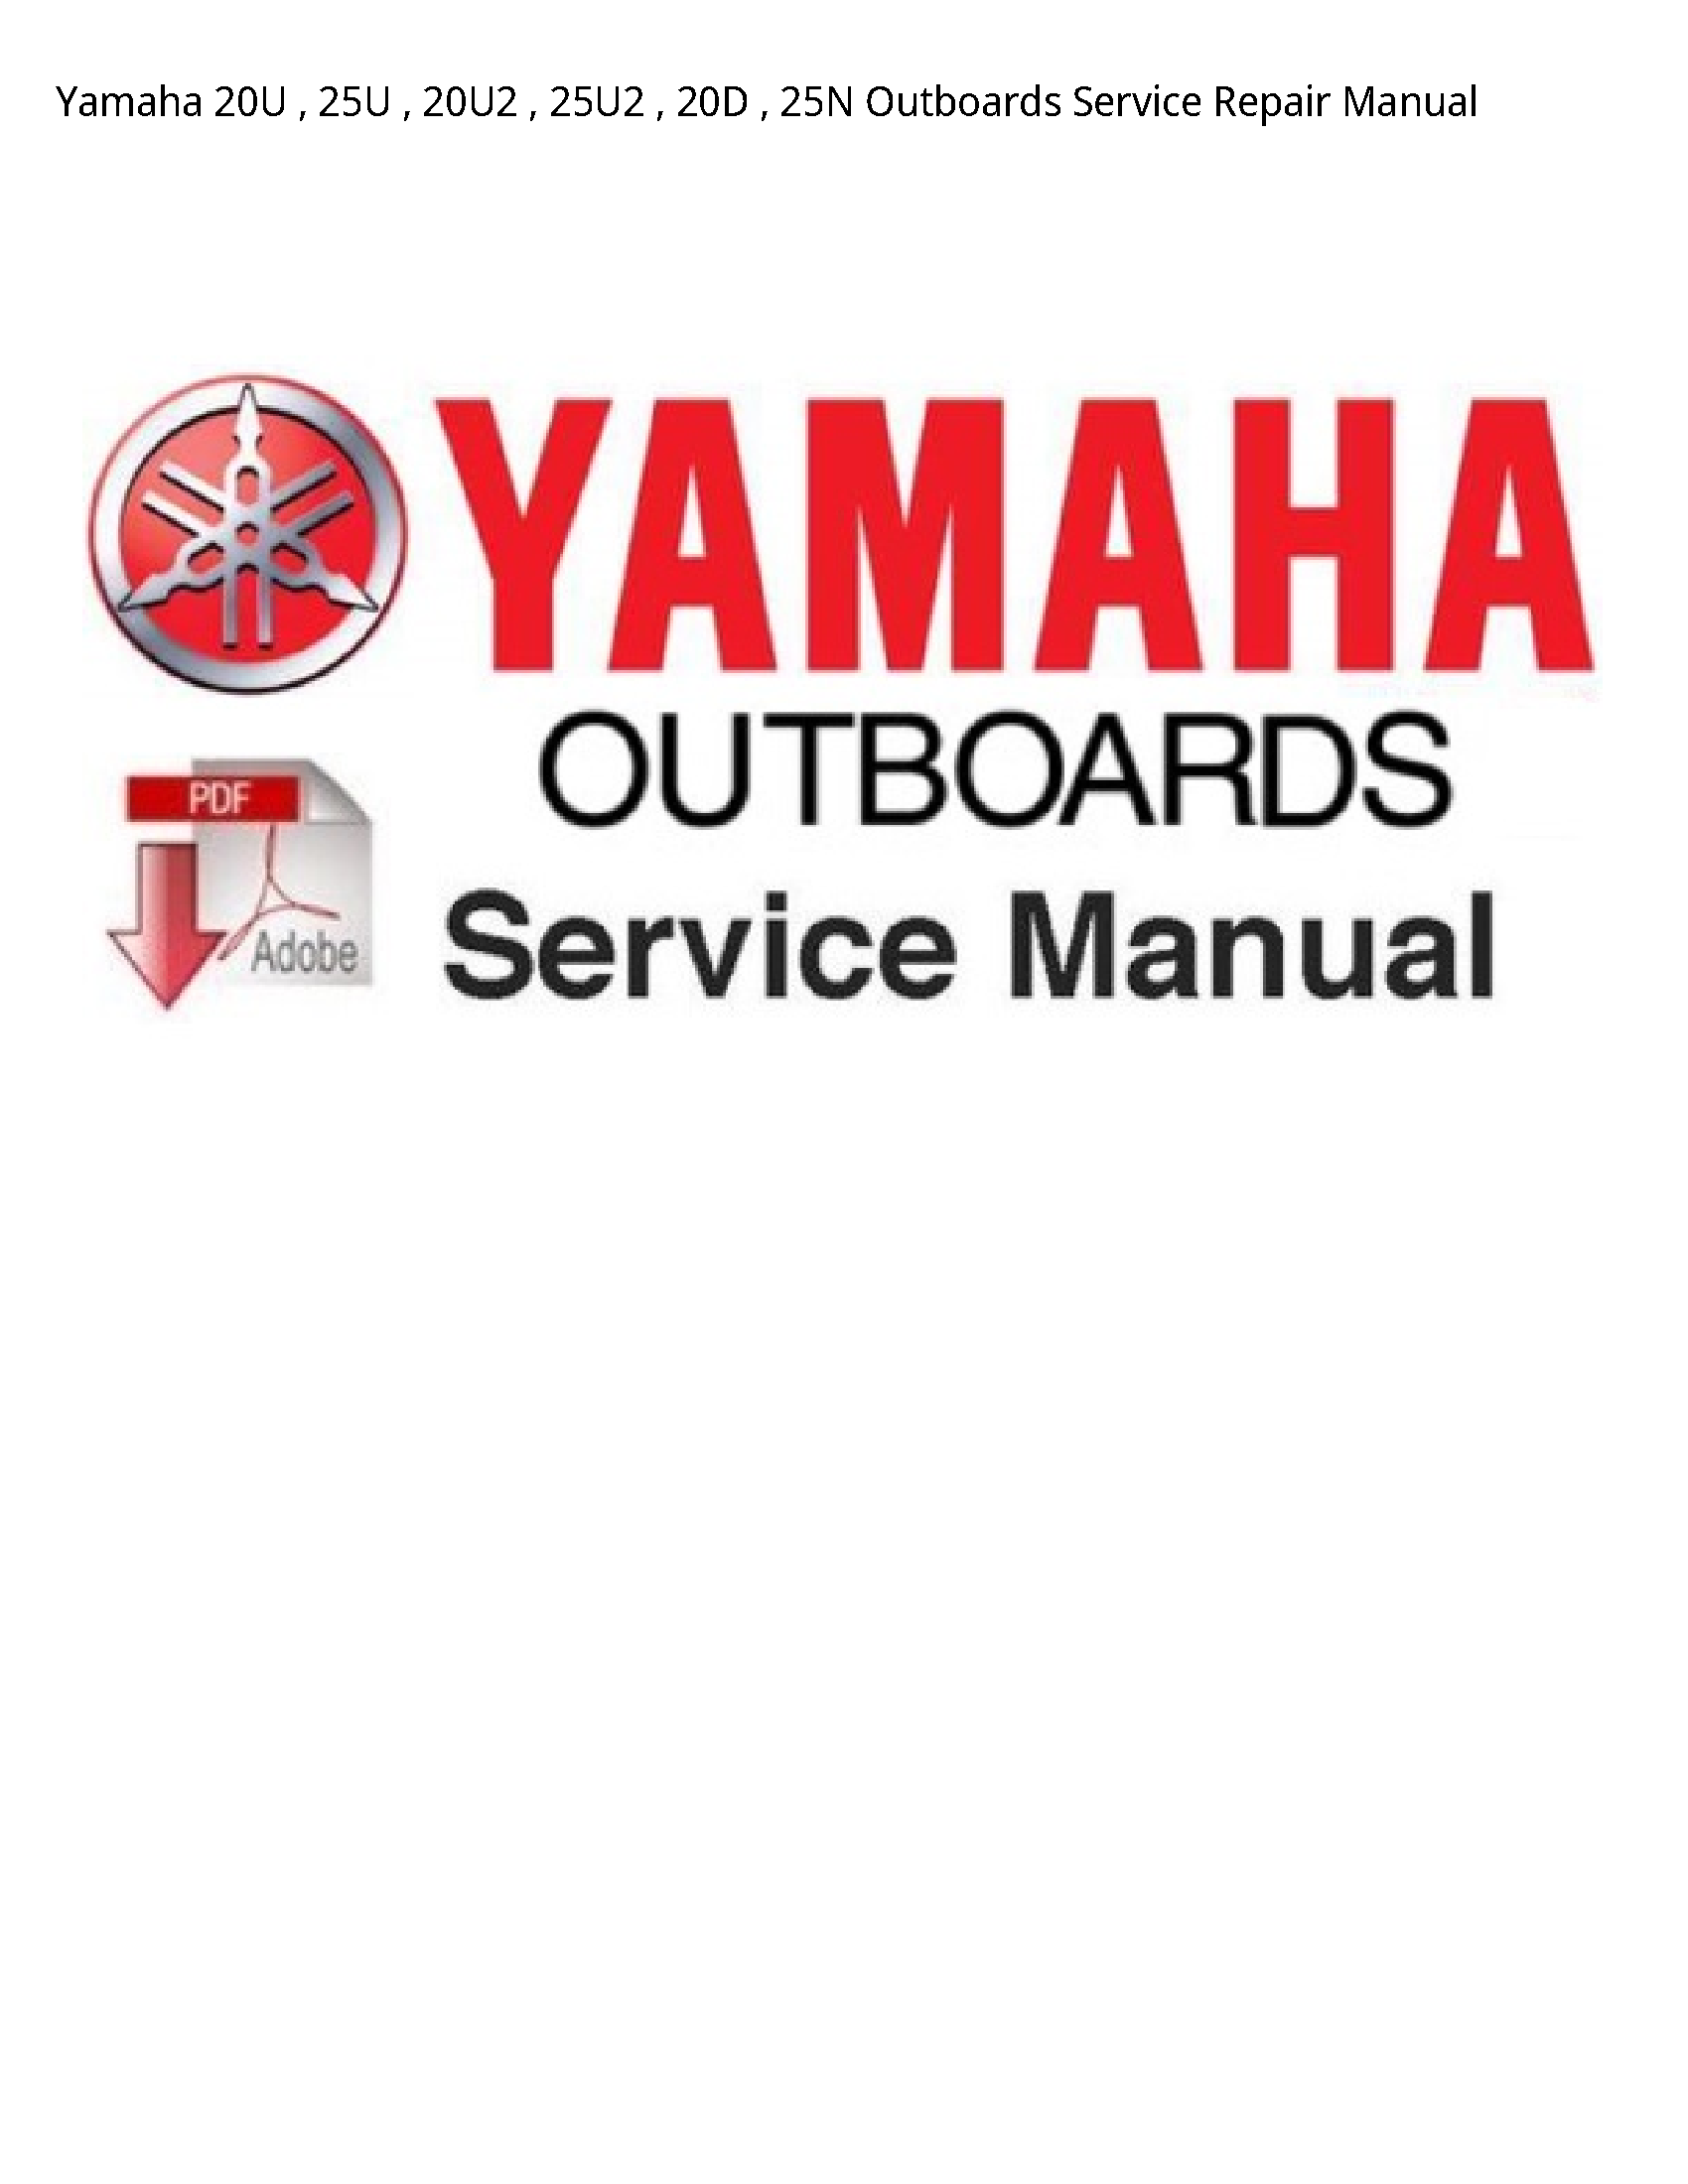 Yamaha 20U Outboards manual